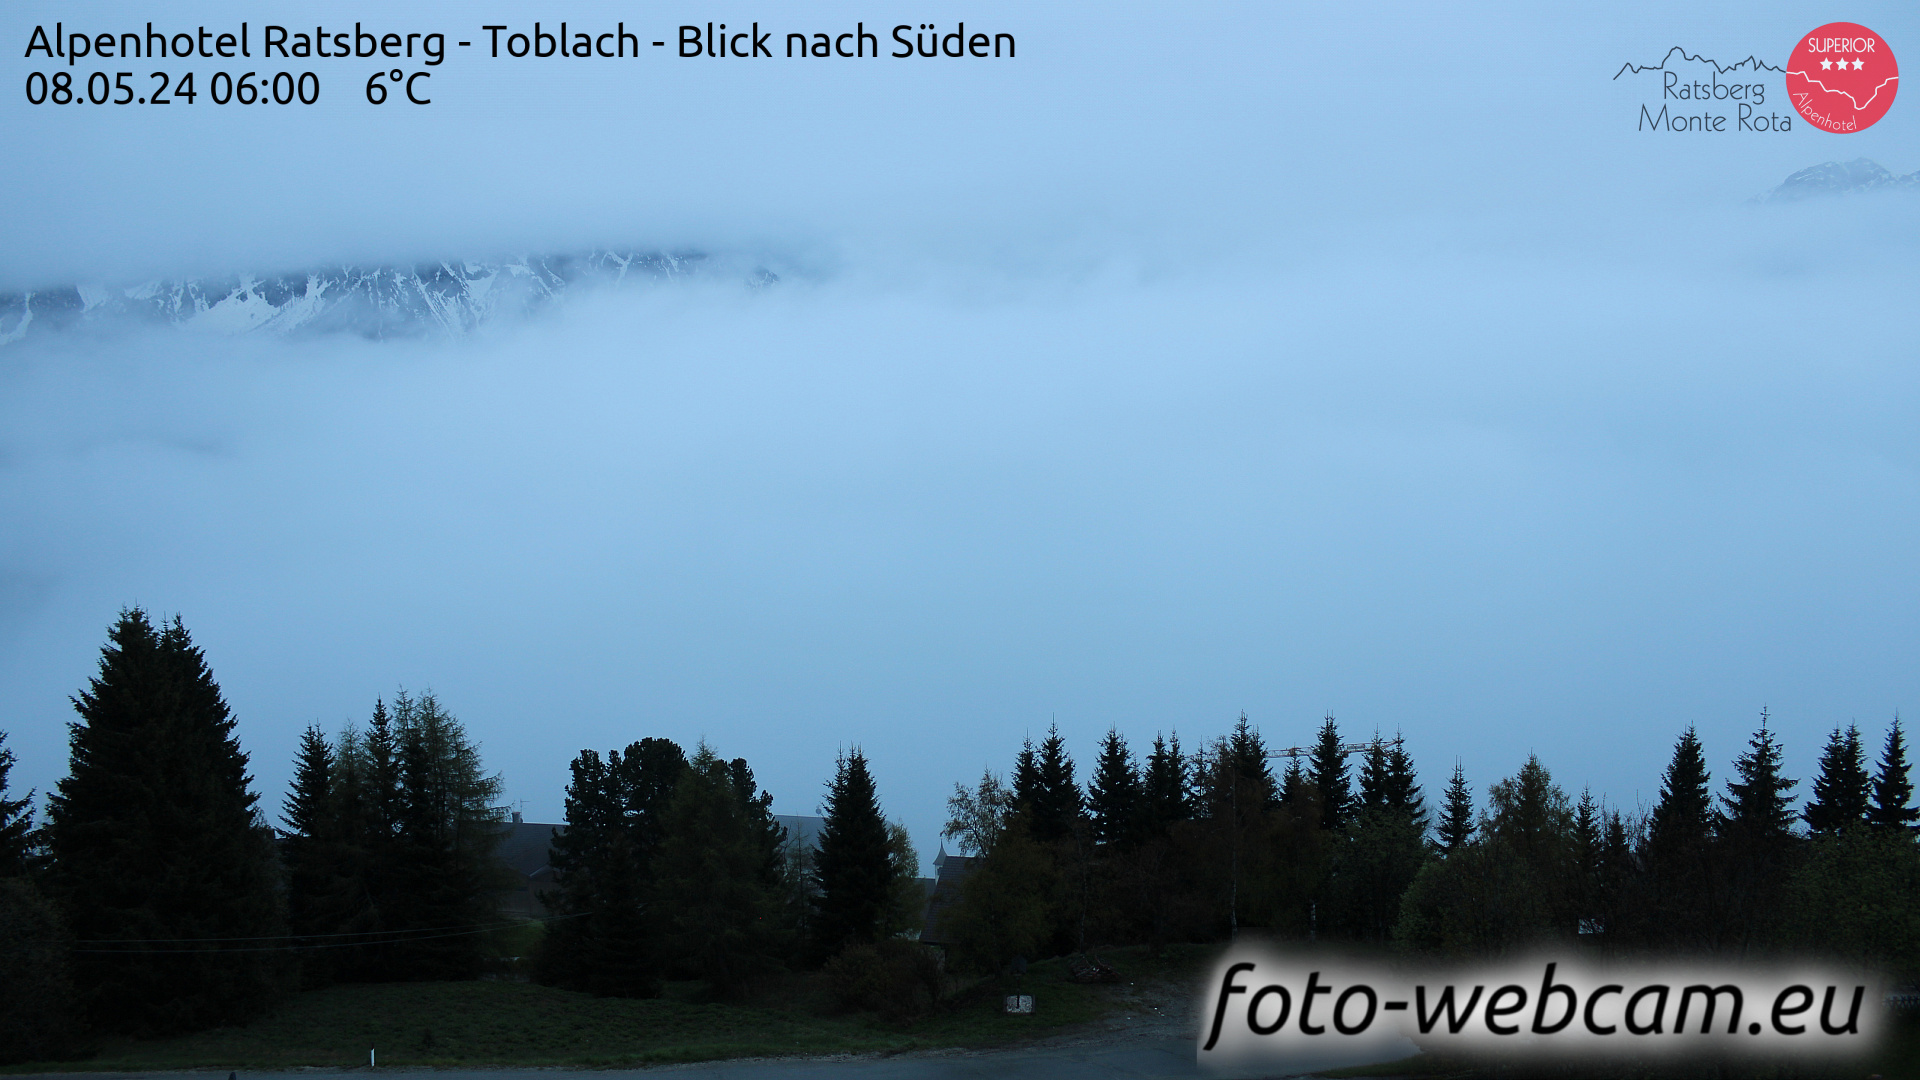 Toblach (Dolomiten) Do. 06:03